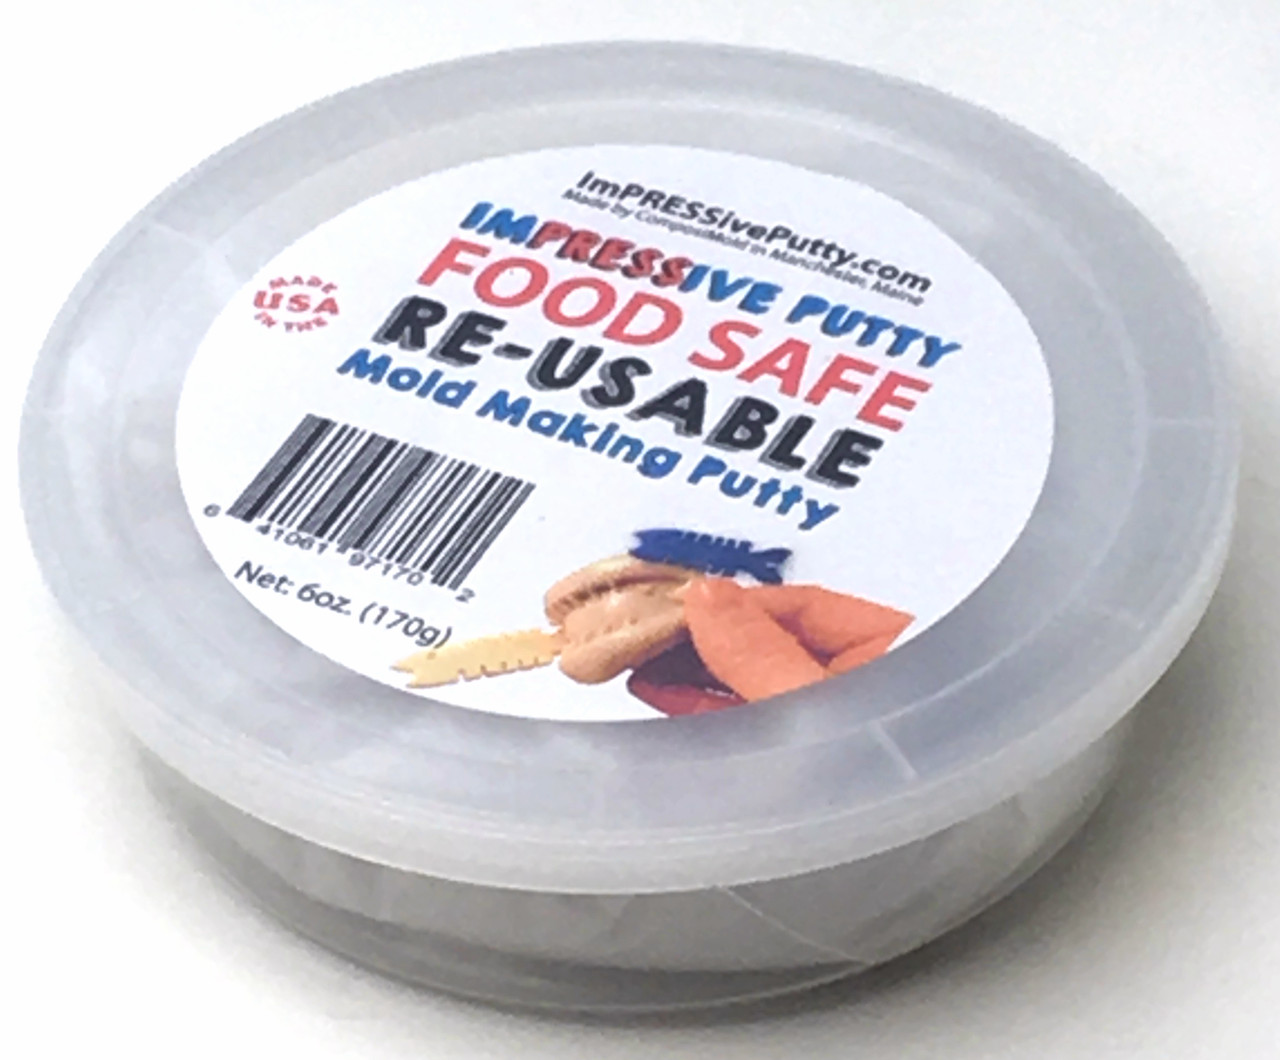 Food Safe ImPRESSive Reusable Molding Putty 1.5 oz 